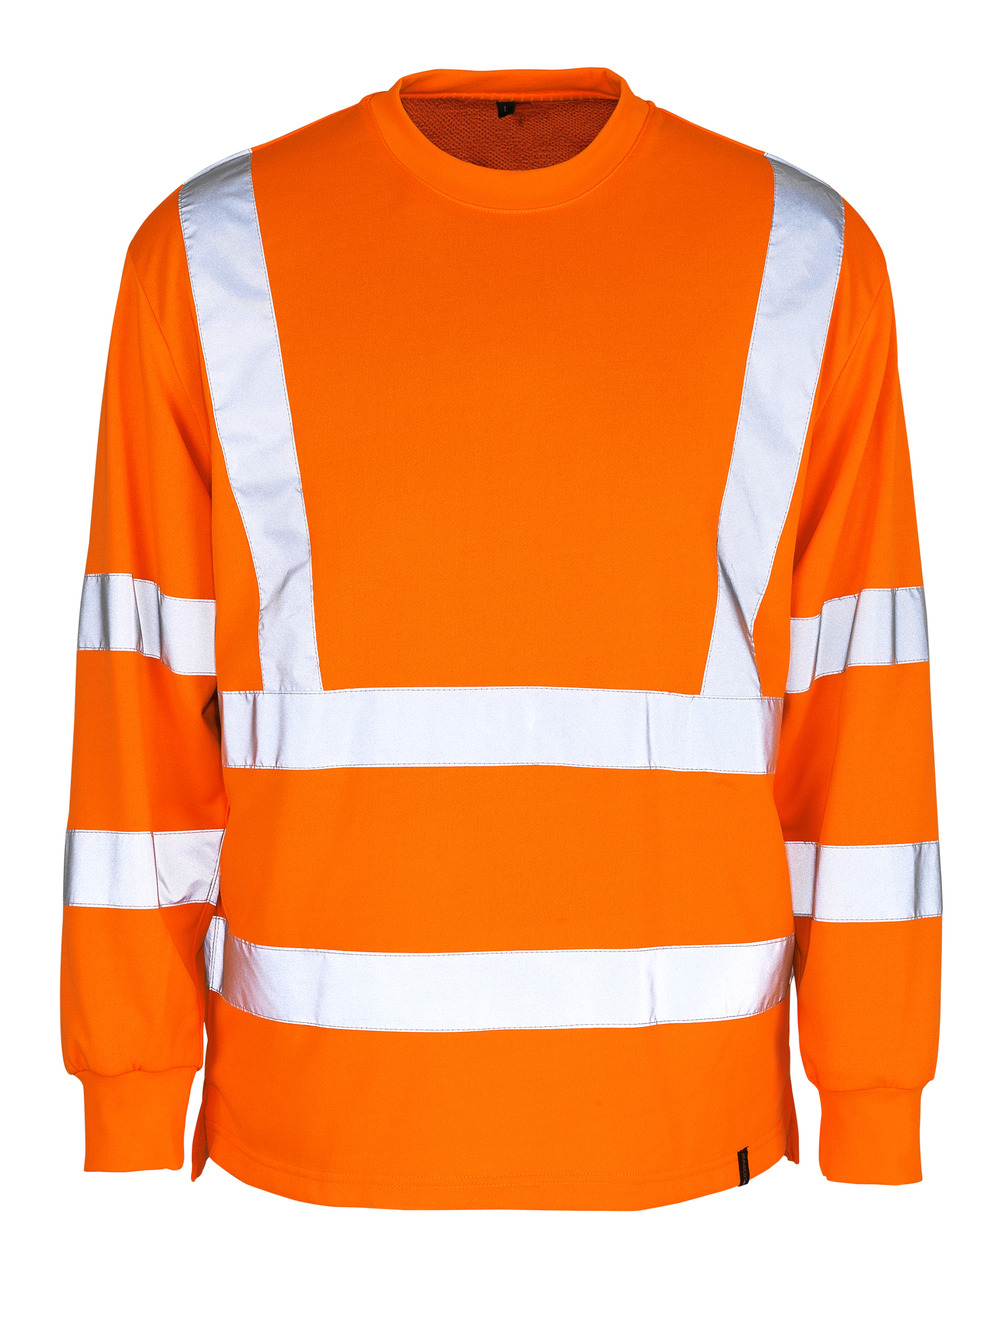 MASCOT-Warnschutz, Warn-Sweatshirt, Melita, 245 g/m², orange

